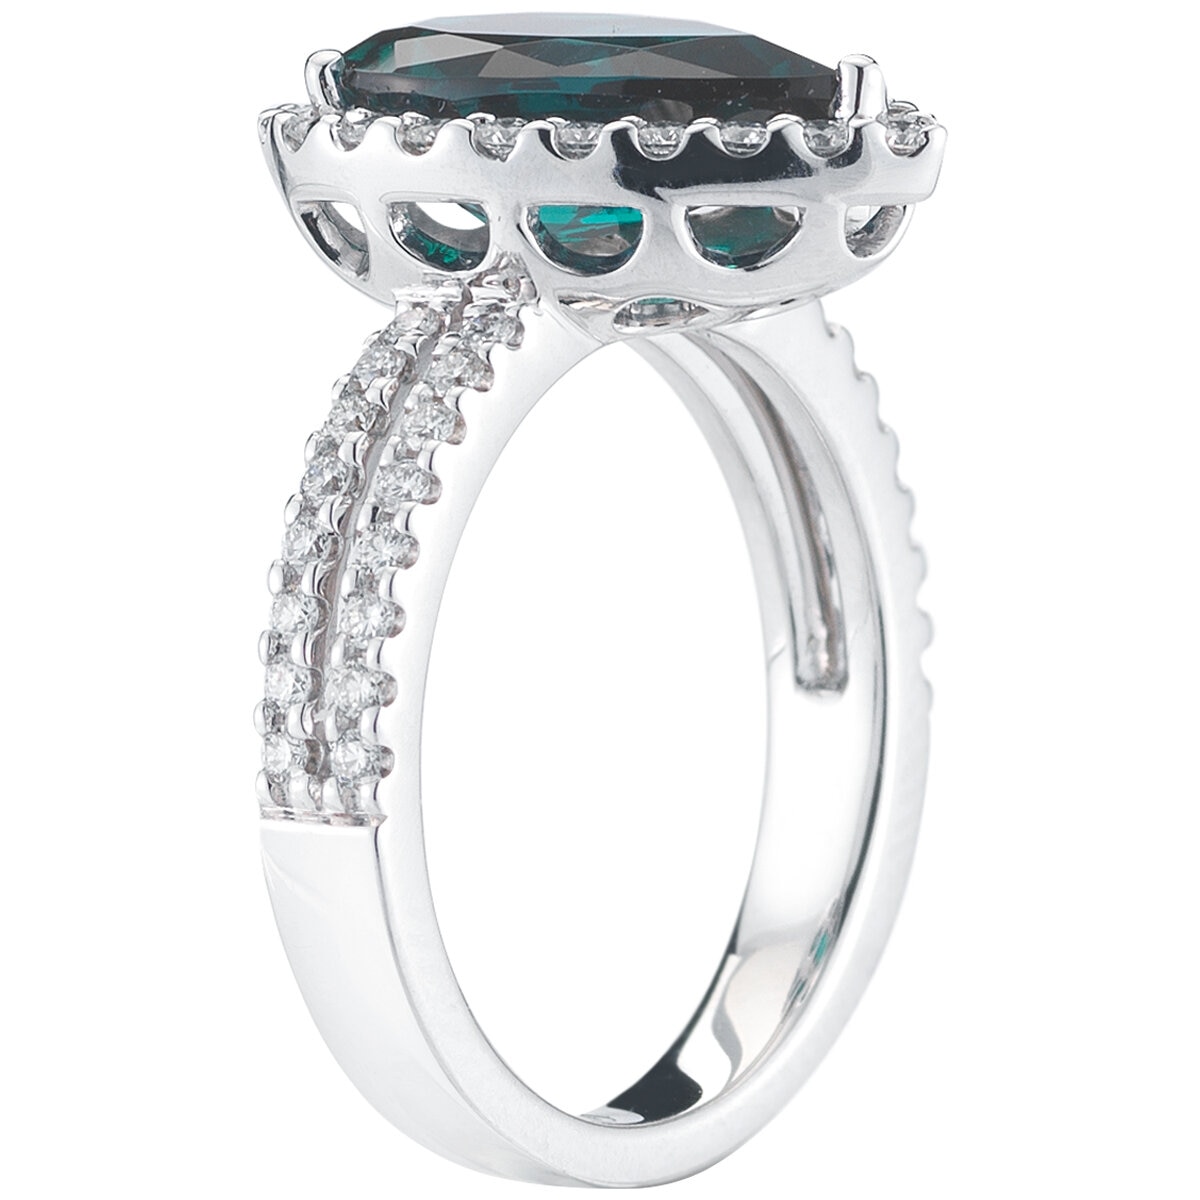 18KT White Gold 0.58ctw Diamond Lab Emerald Ring